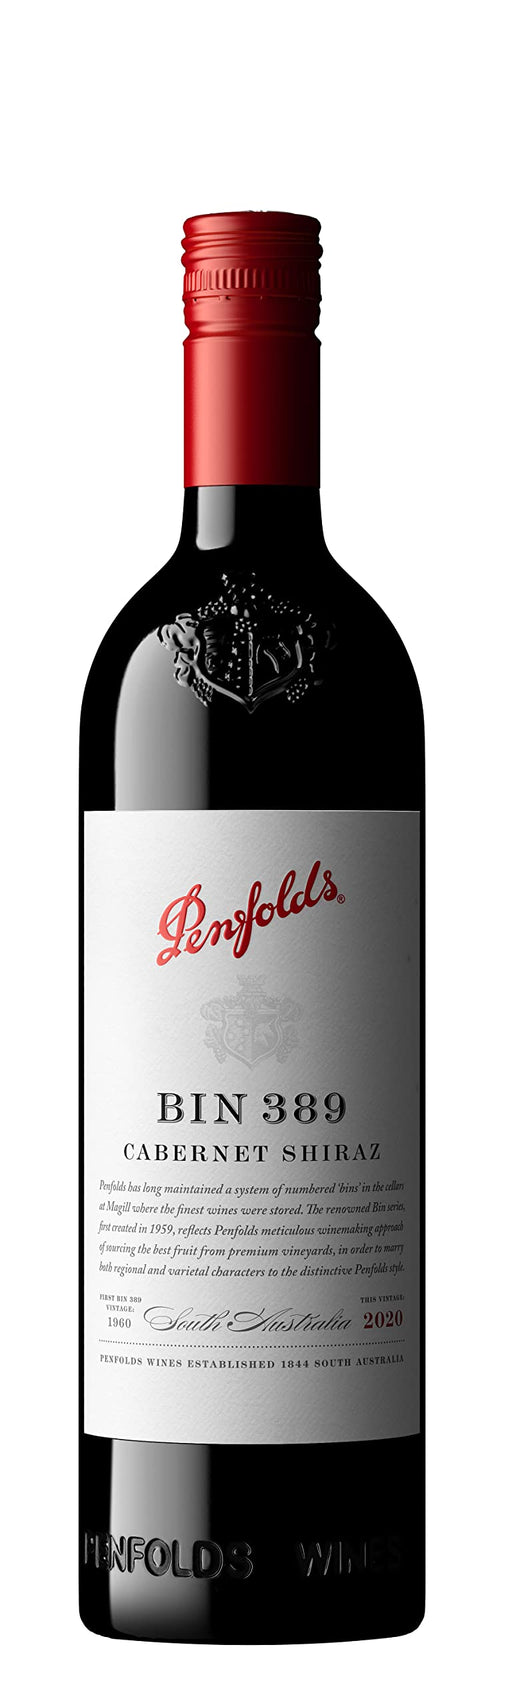 Penfolds Bin 389 Cabernet Shiraz Wine 2020 Release Giftbox (Single bottle x 1)  Visit the Penfolds Store